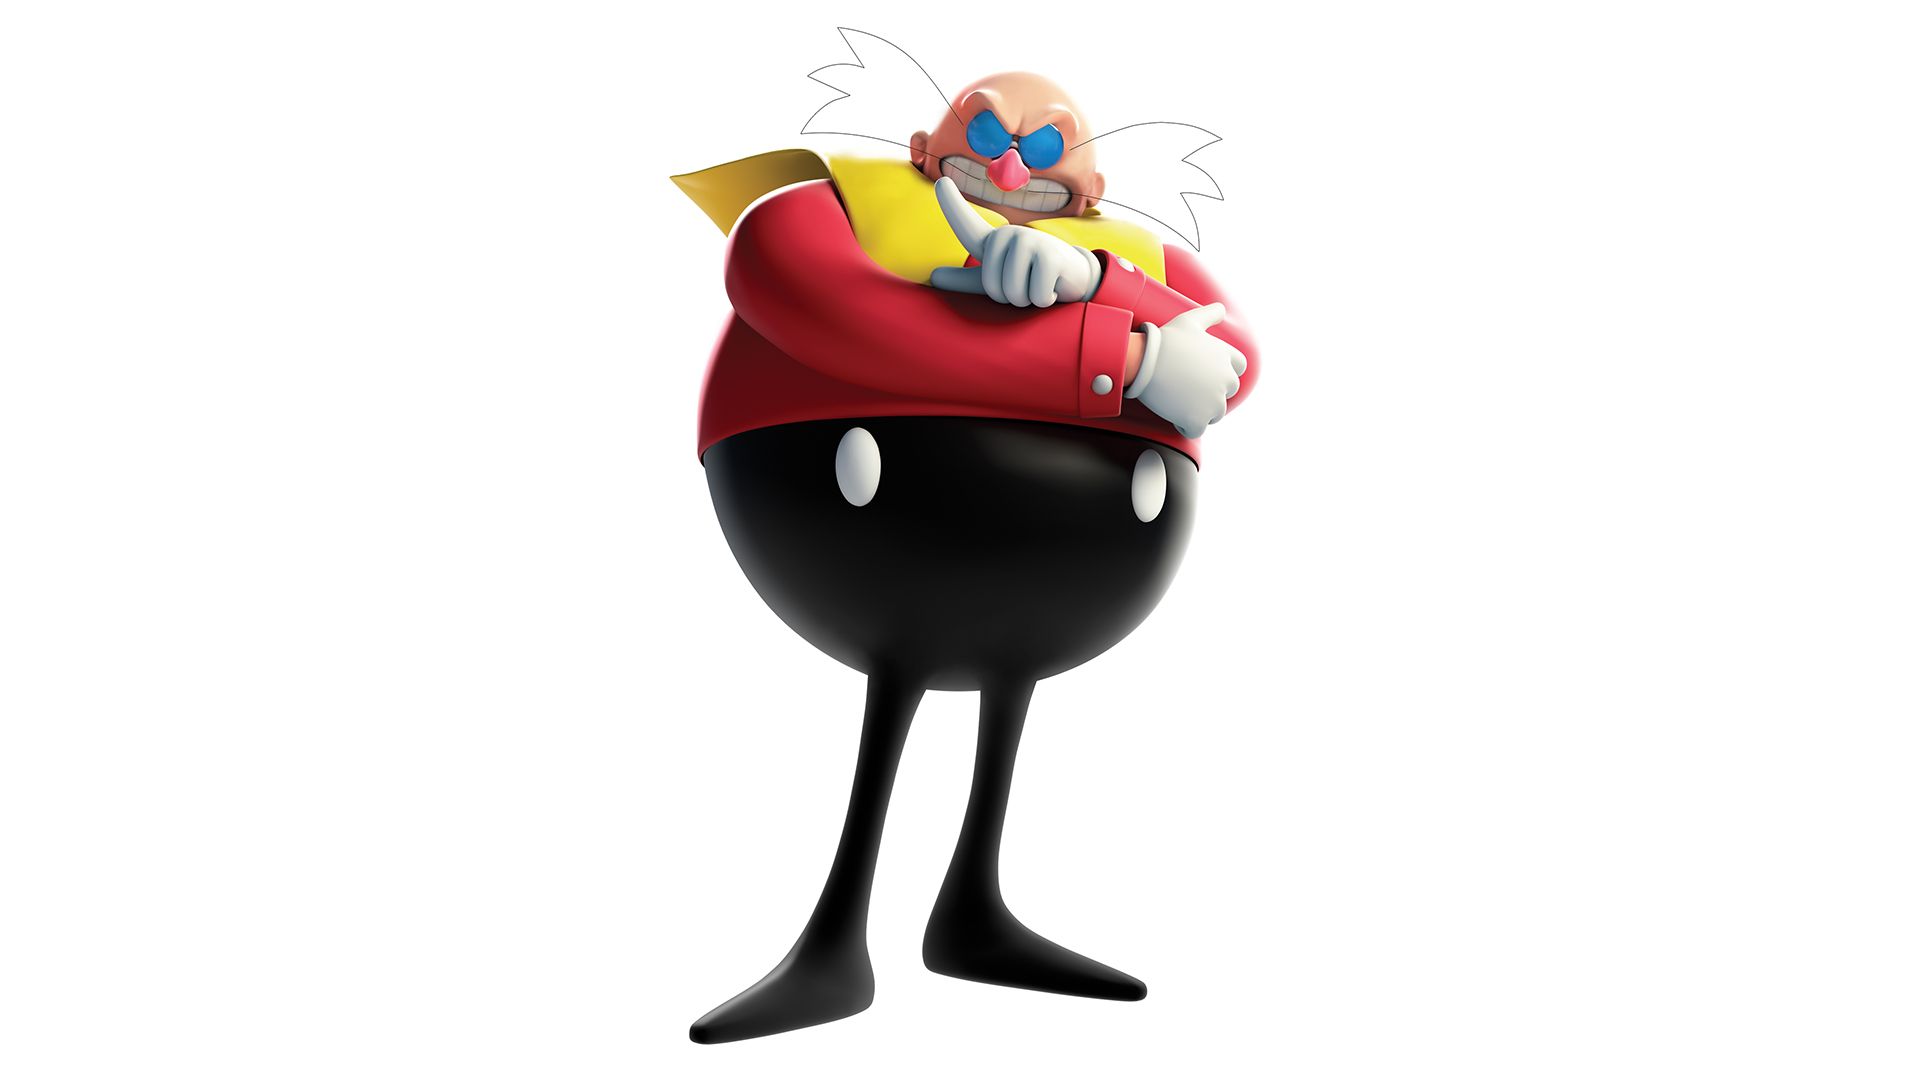 Animated image of Dr Eggman